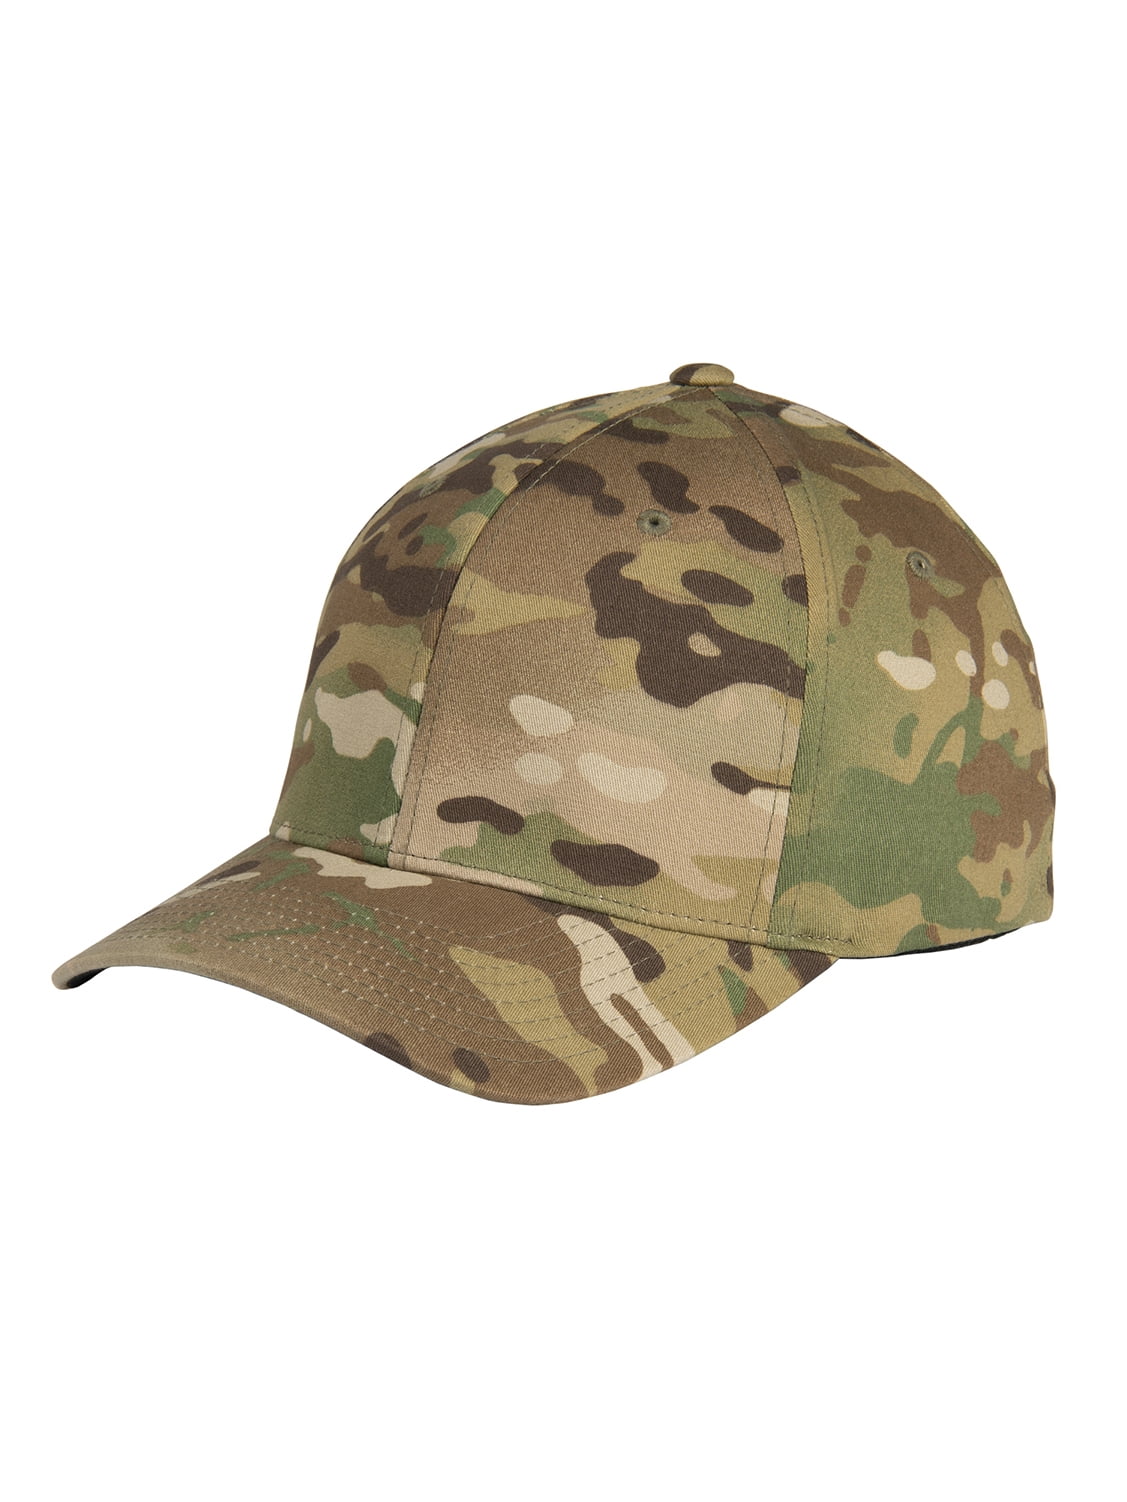 Fit Olive Drab/Green - - Headwear Large/X-Large Flex Cap Baseball Top